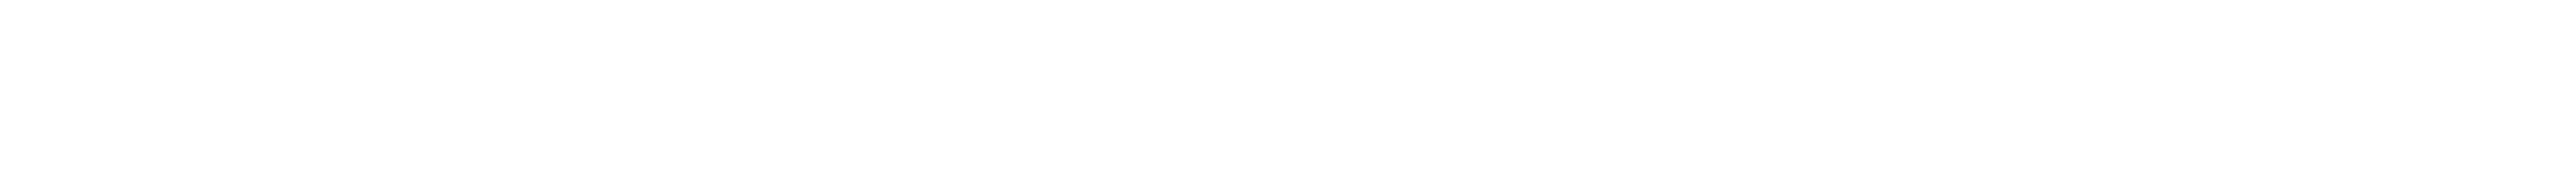 I am Hitachi